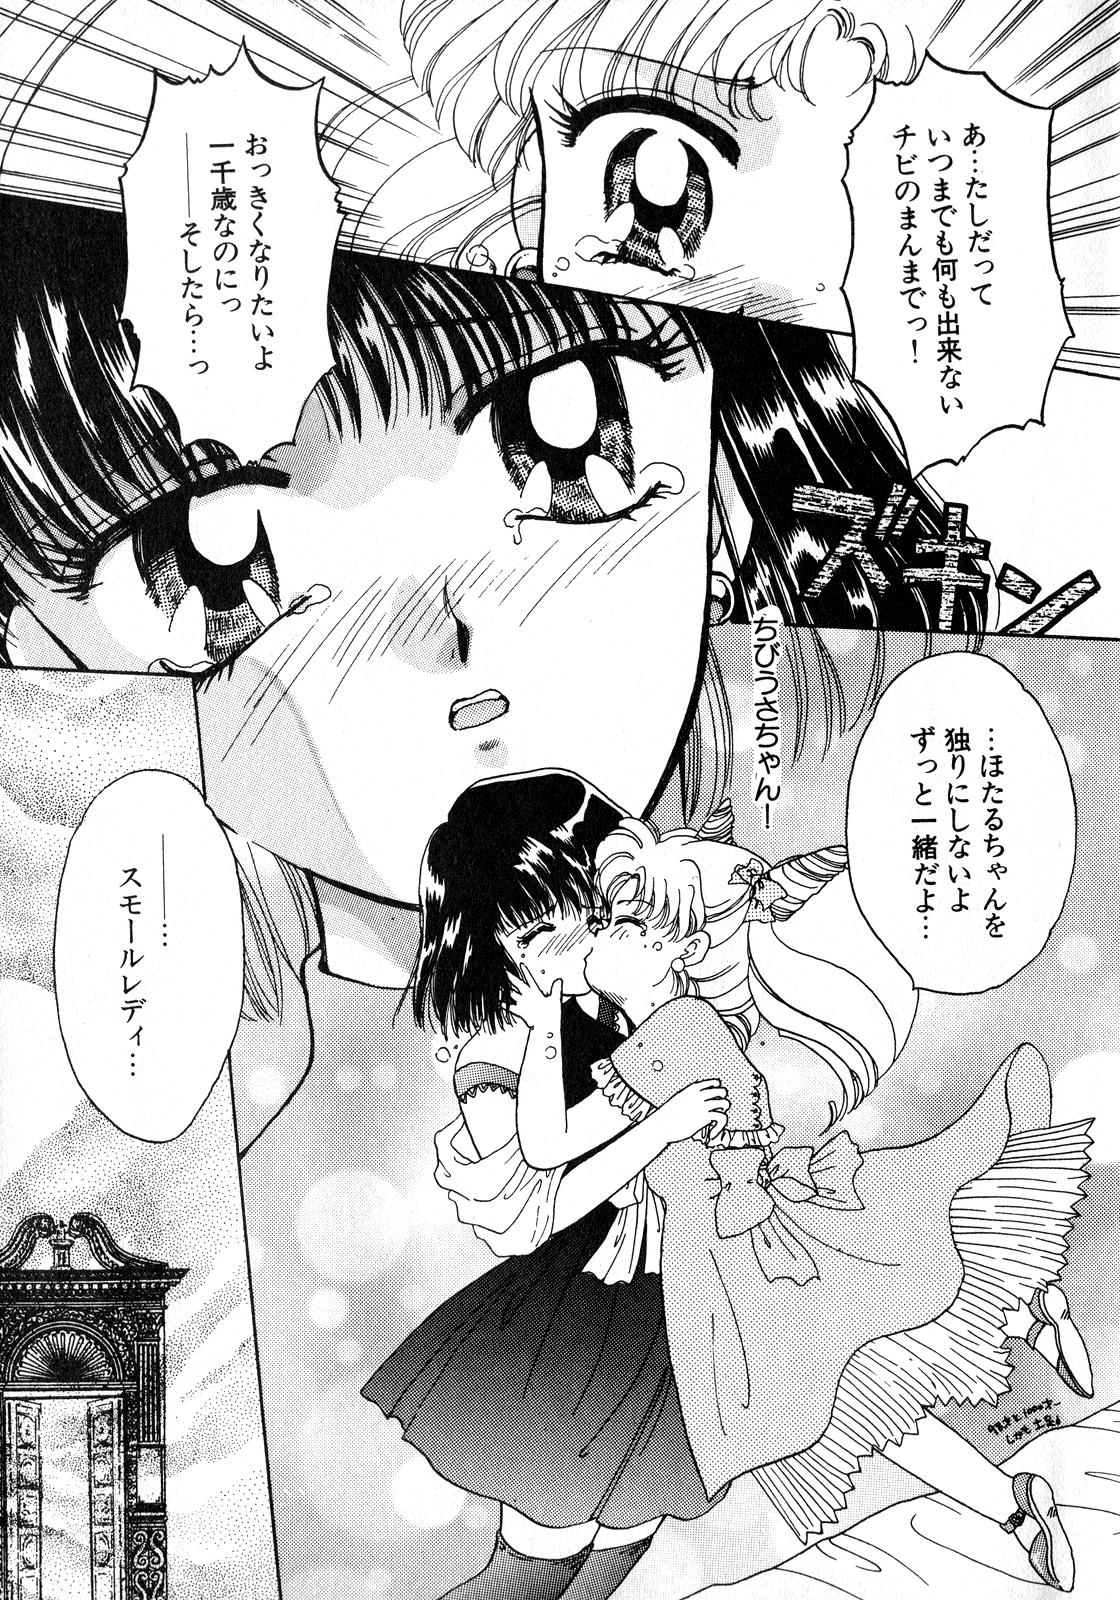 Bisexual Lunatic Party 8 - Sailor moon Coroa - Page 8